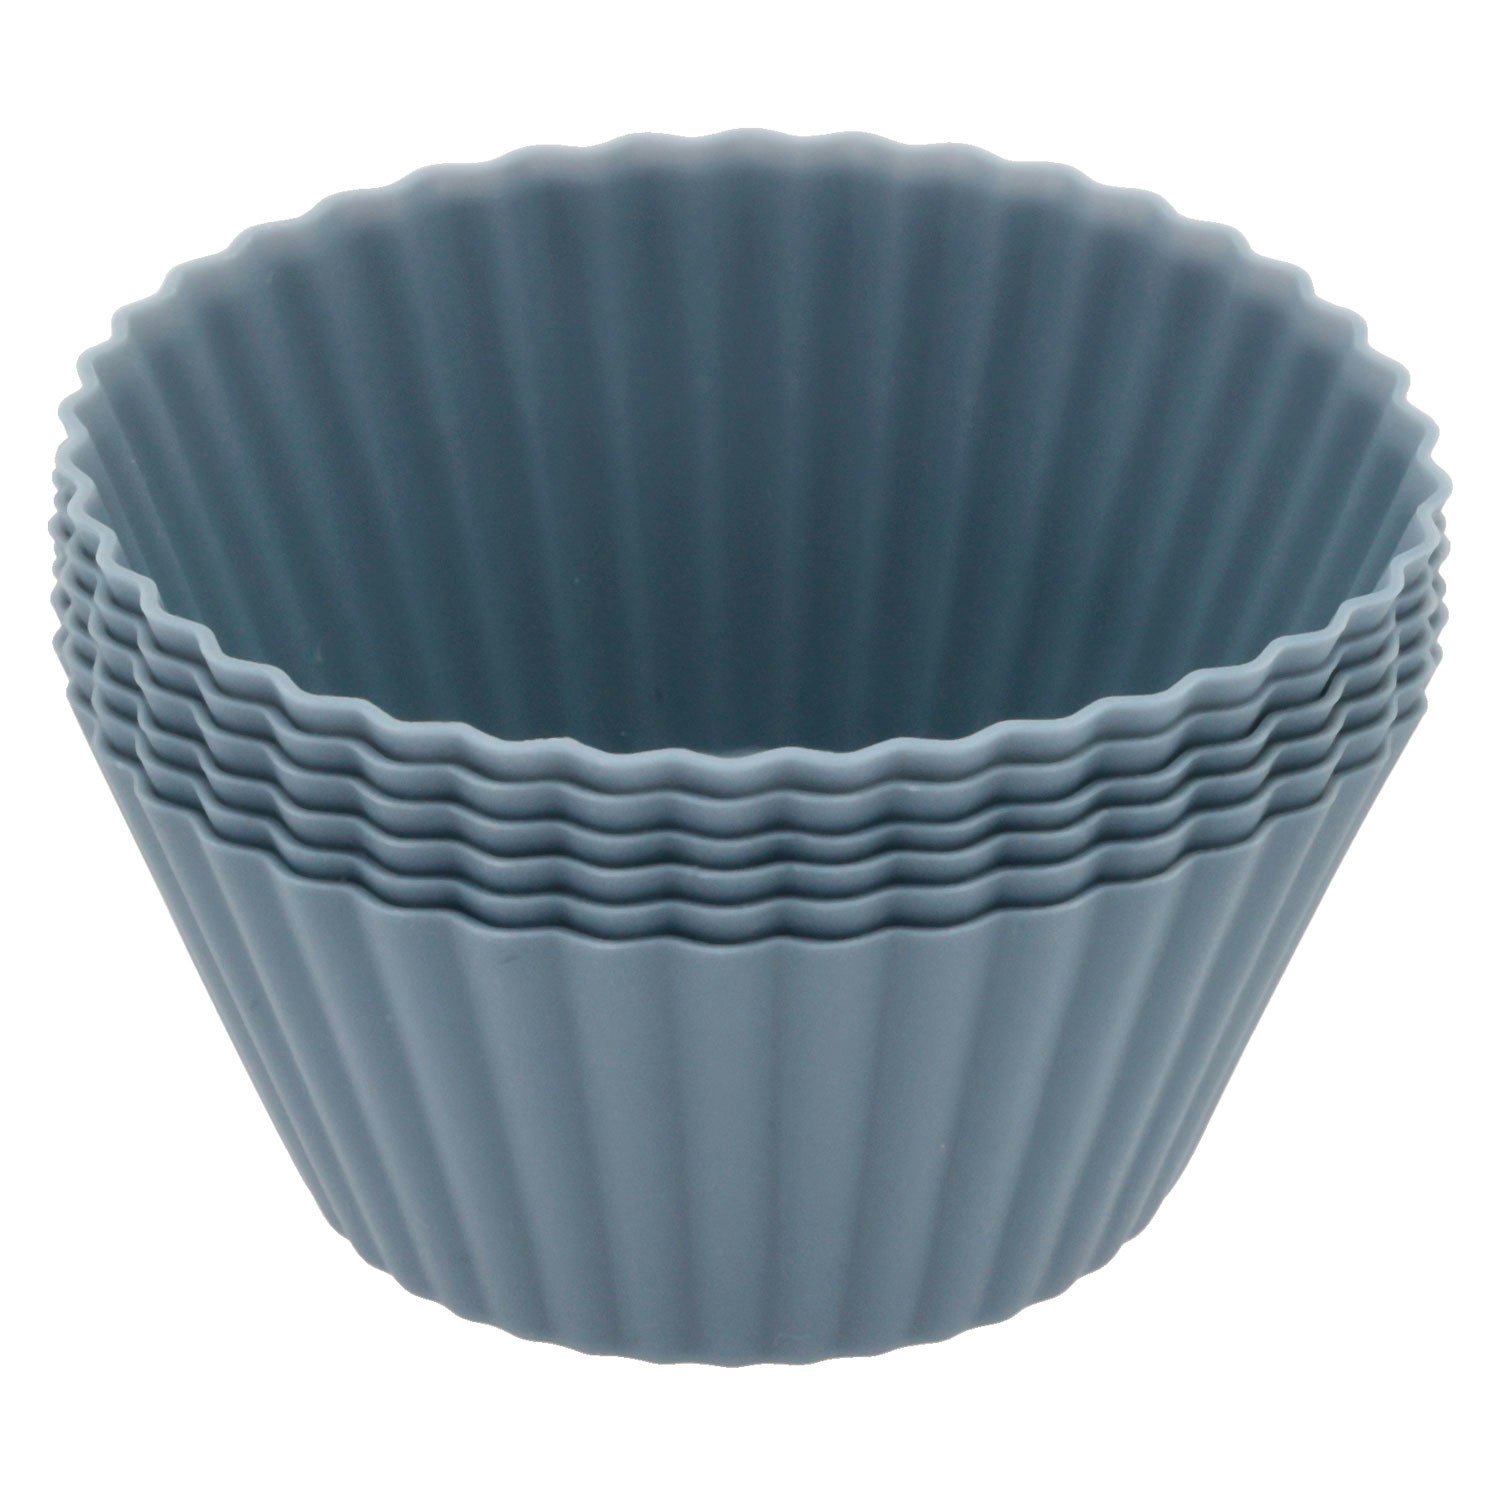 https://royaldesign.com/image/2/kitchenware-by-tareq-taylor-pecan-cupcake-cases-6-pack-1